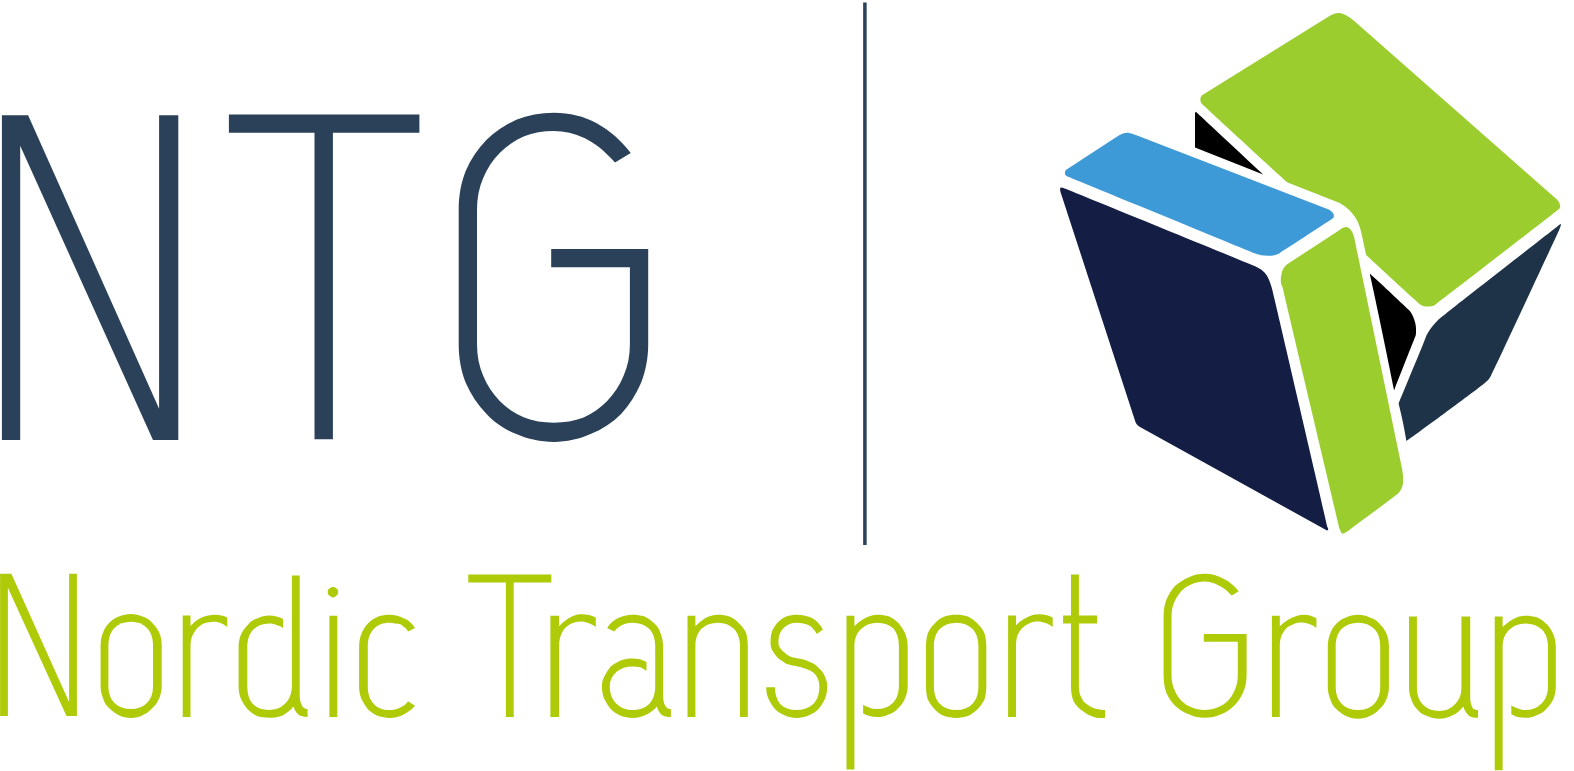 NTG Nordic Transport Group A/S logo large (transparent PNG)